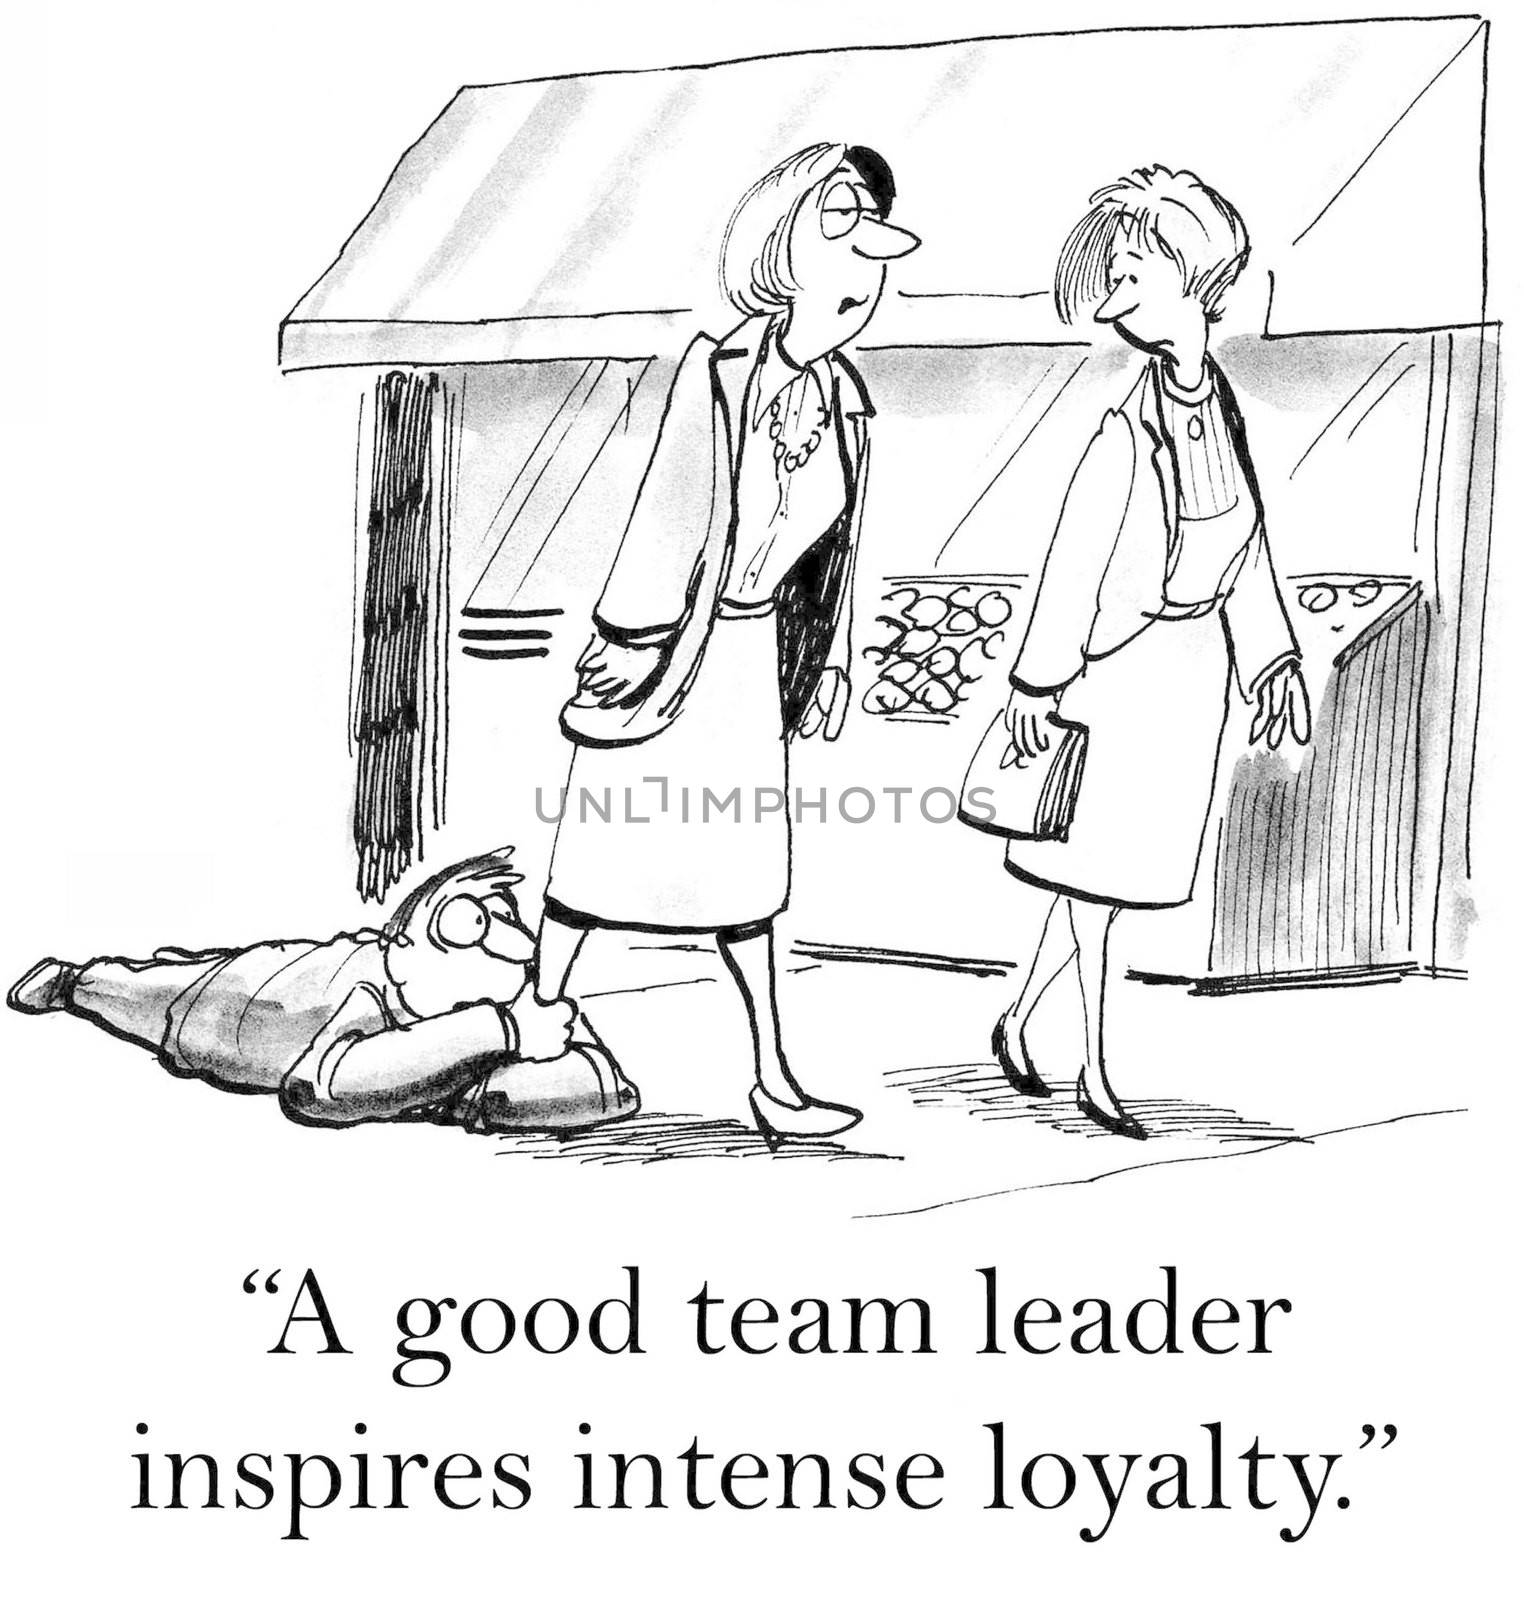 "A good team leader inspires intense loyalty."